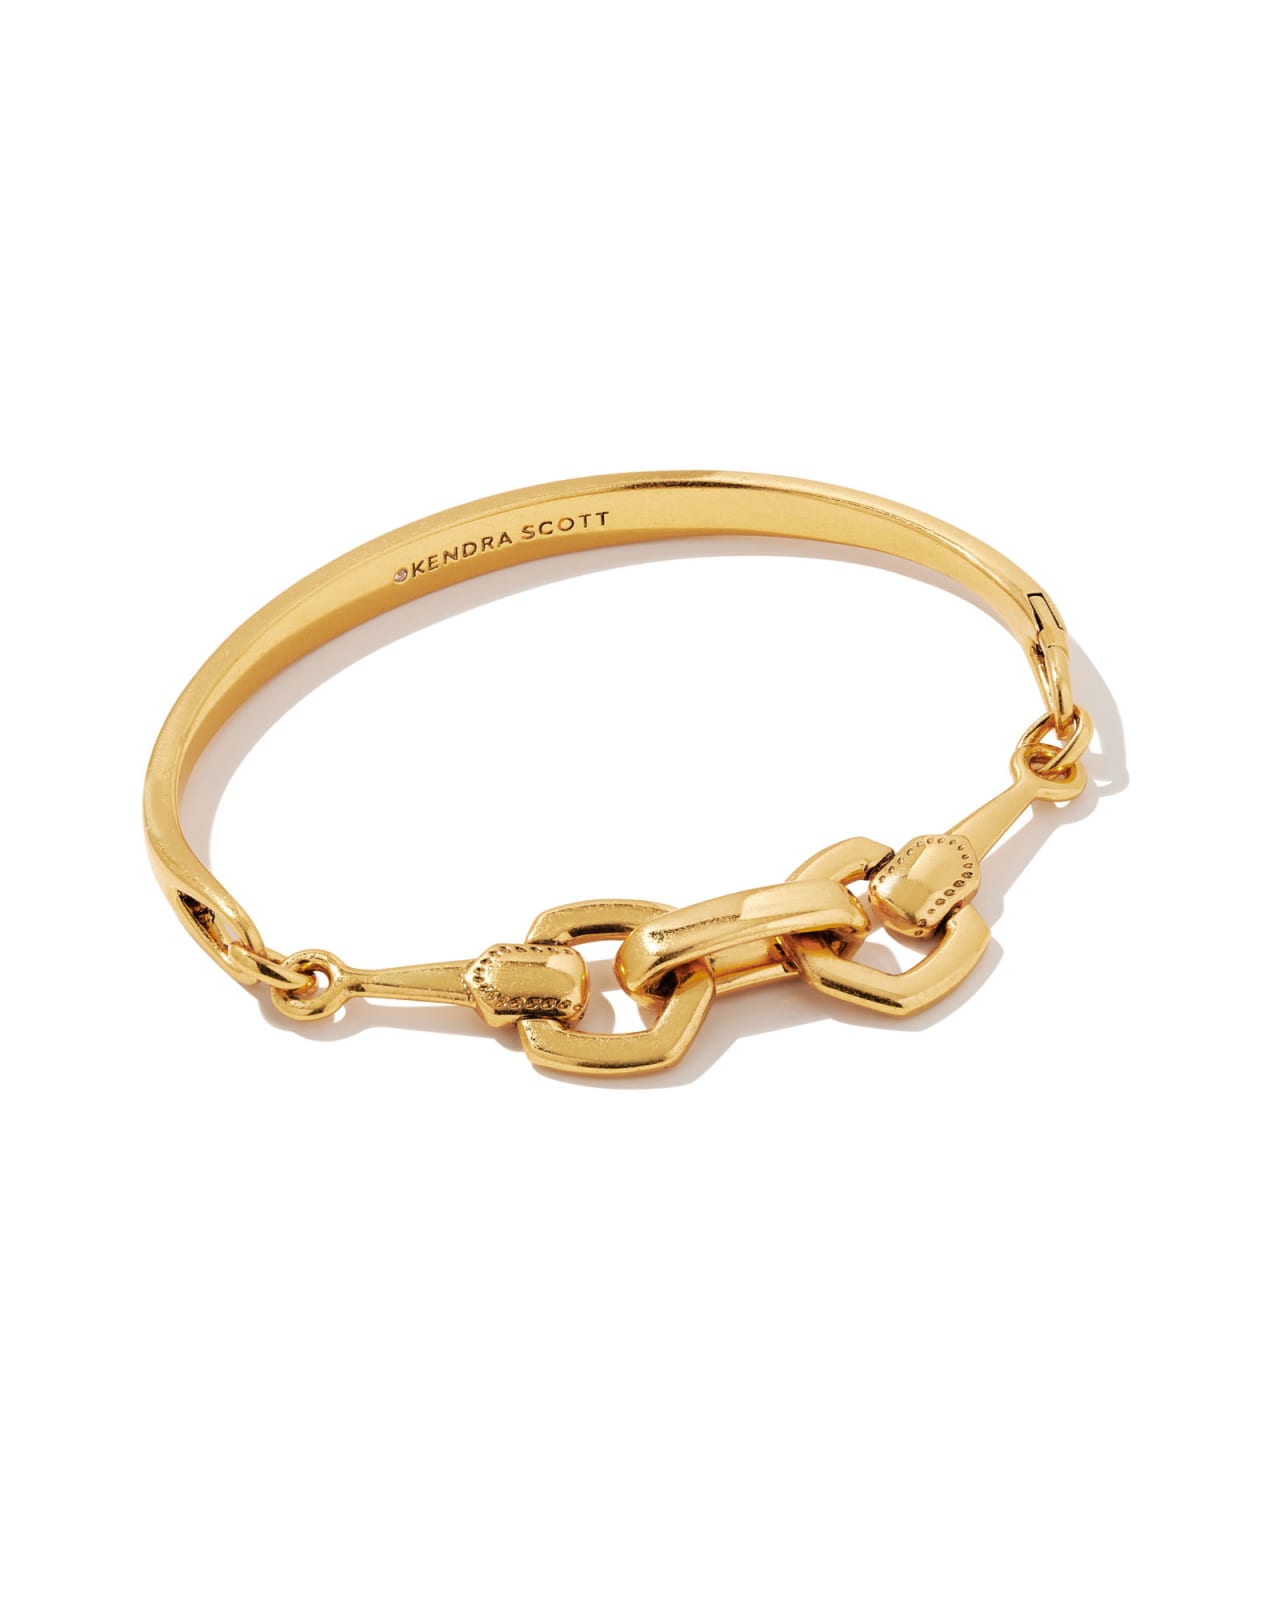 Beau Link Bracelet in Vintage Gold | Kendra Scott